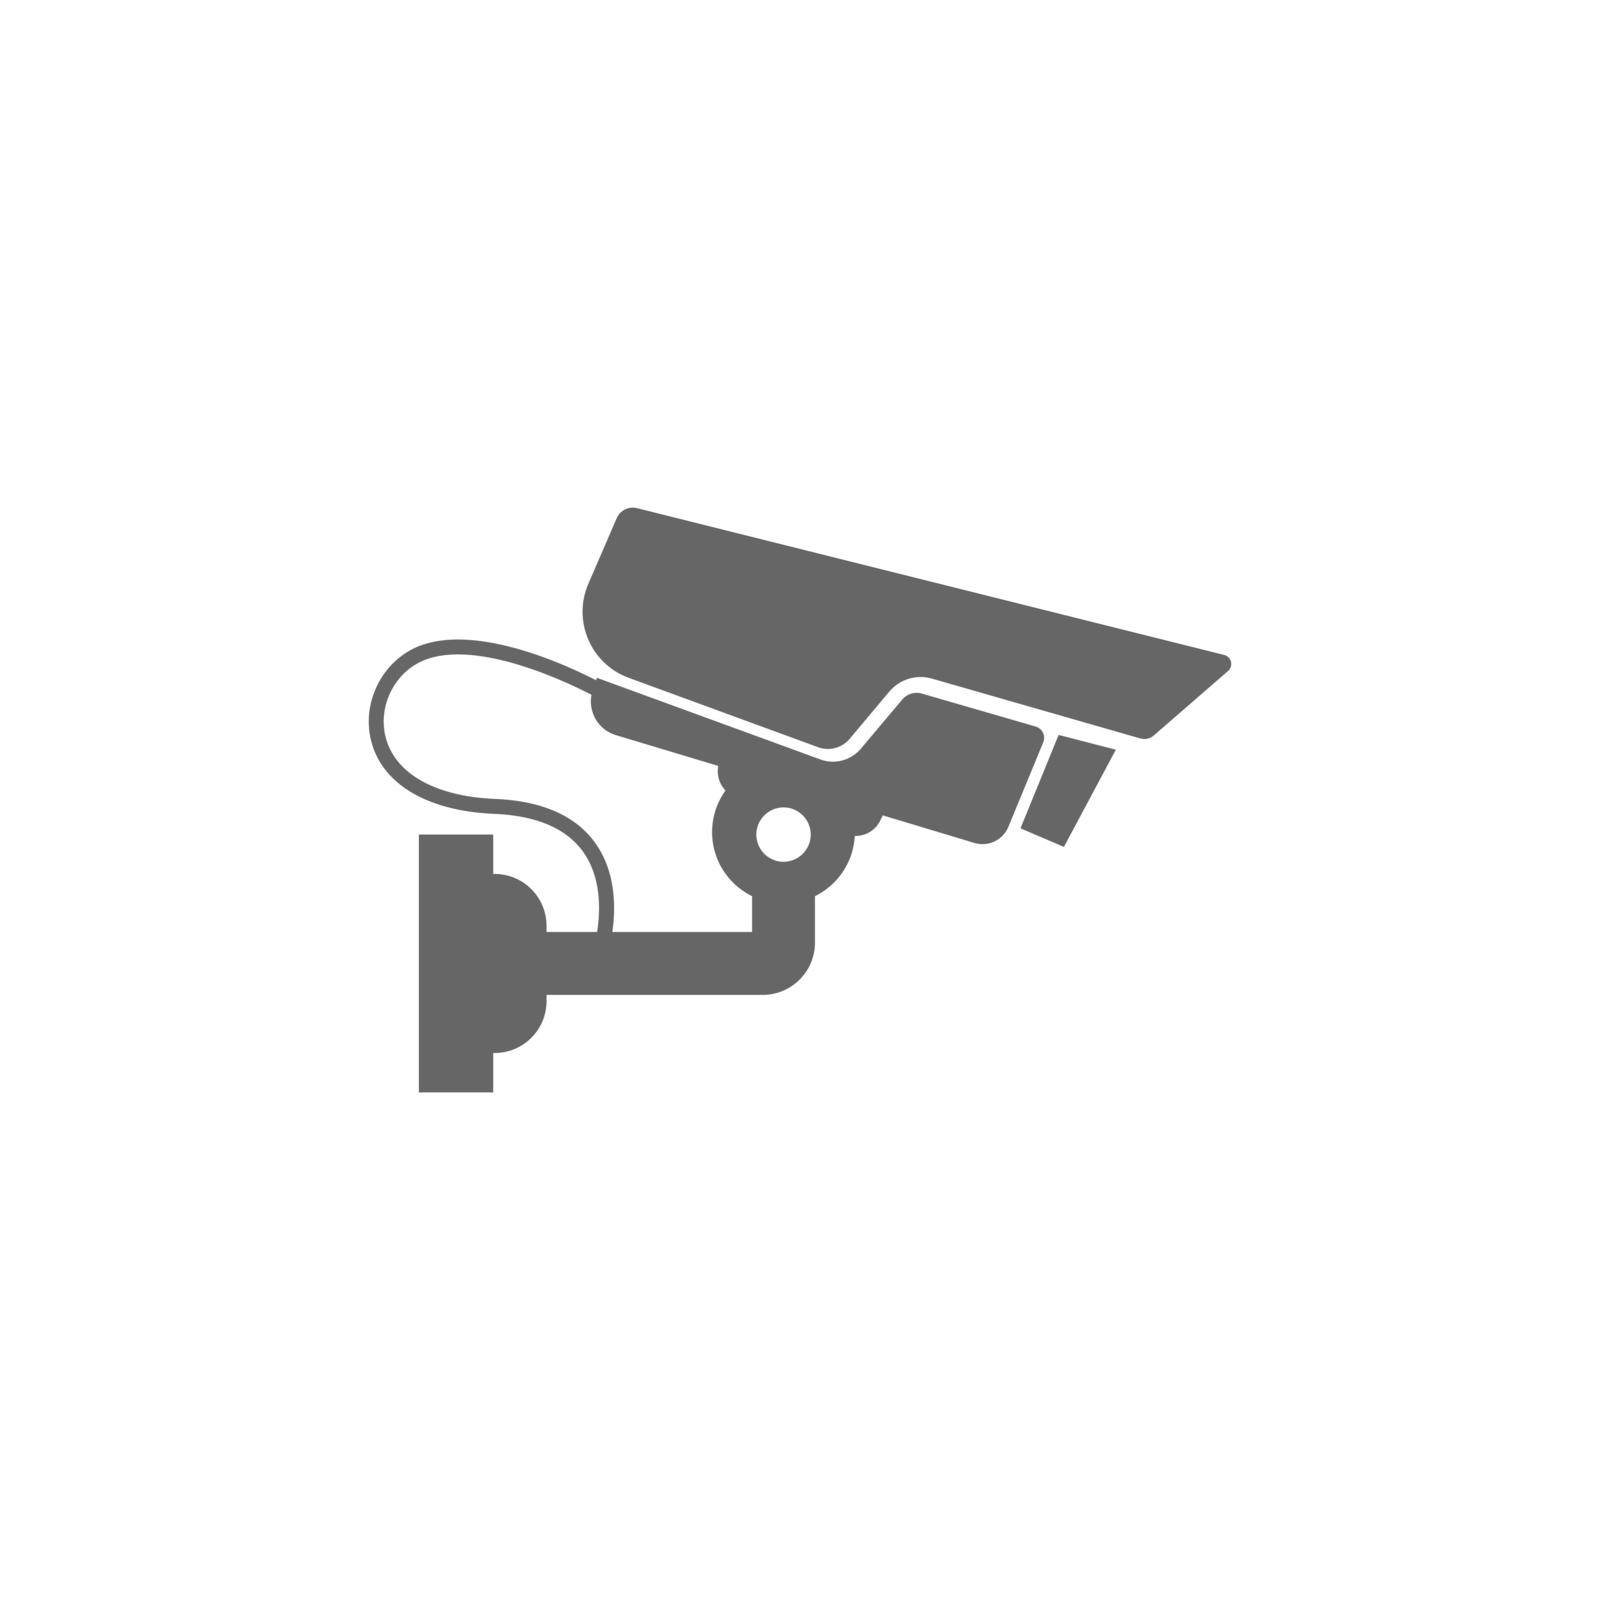 CCTV icon flat design illustration template by siti